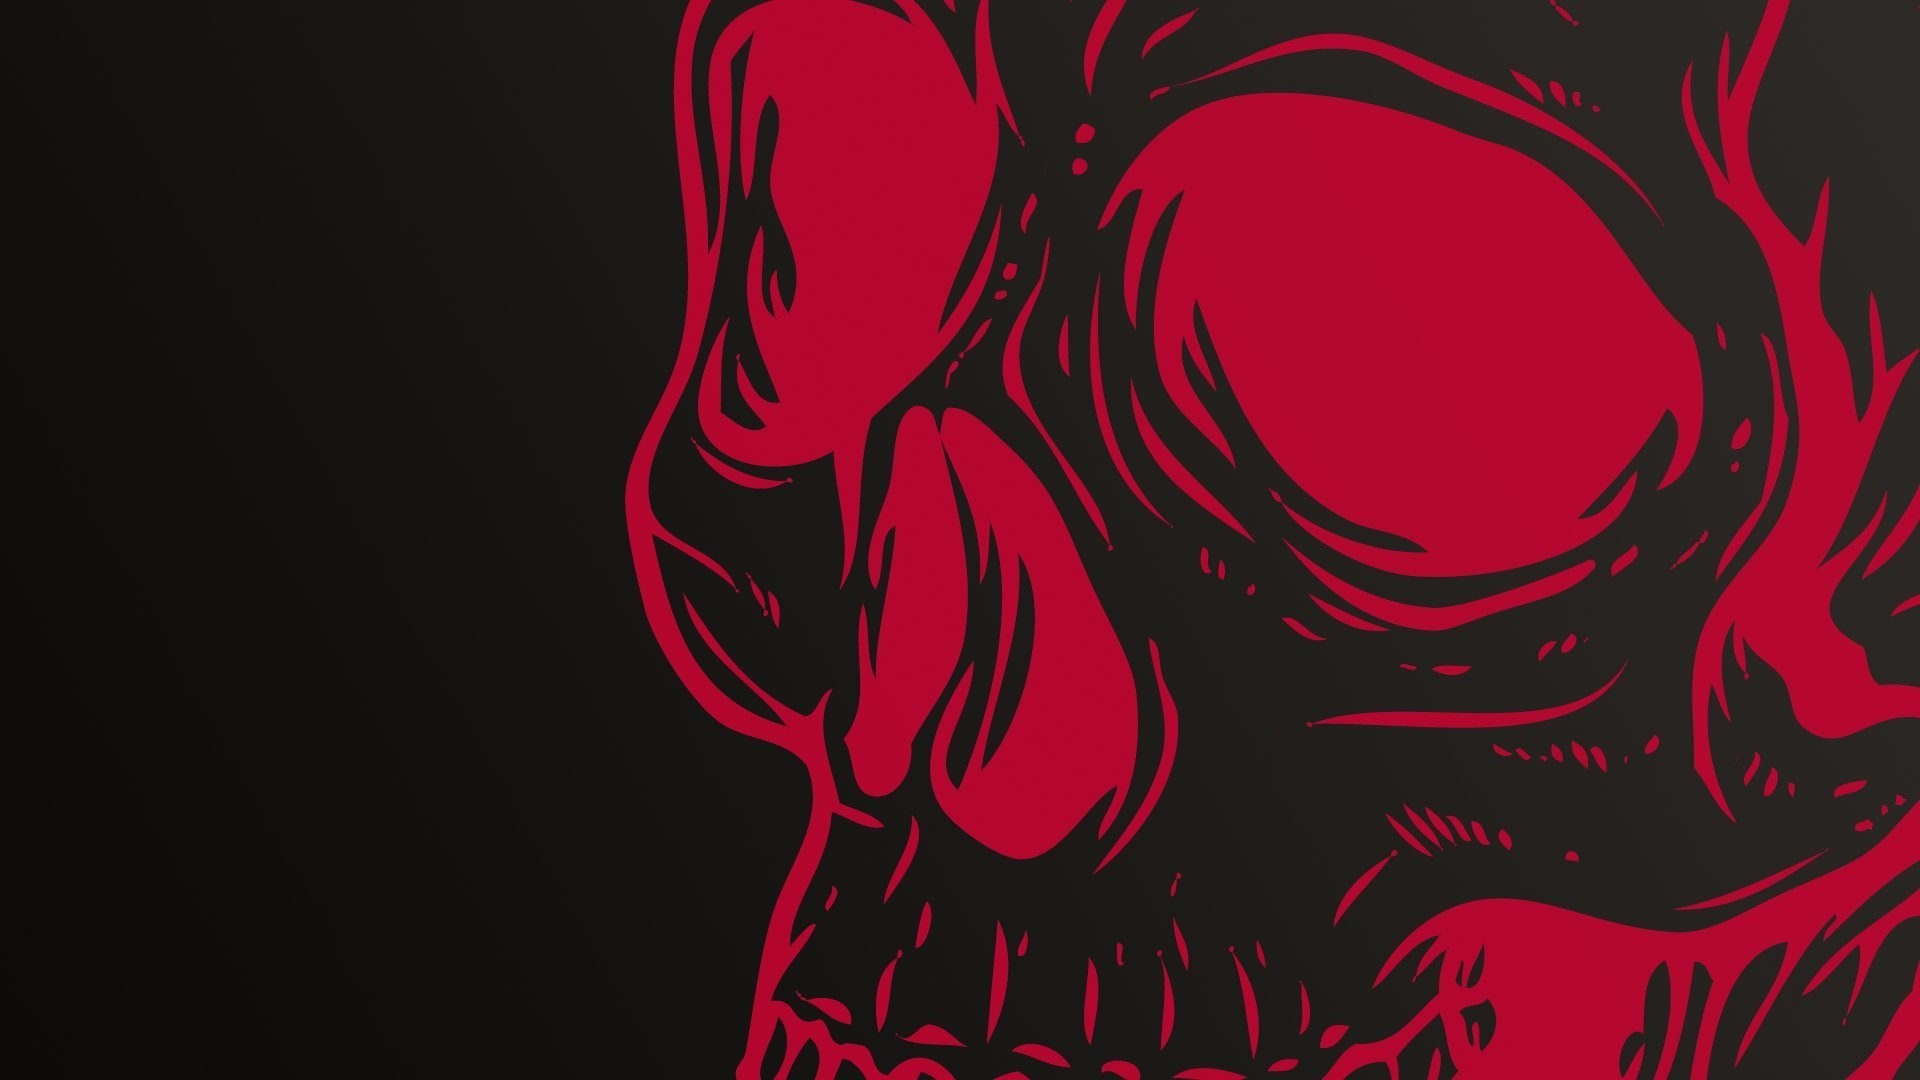 1920x1080  Red skulls wallpaper danaspdftop Source ÃÂ·  Abstract Skull  Wallpapers Wallpaper Red And Black Skull Wallpapers Wallpapers